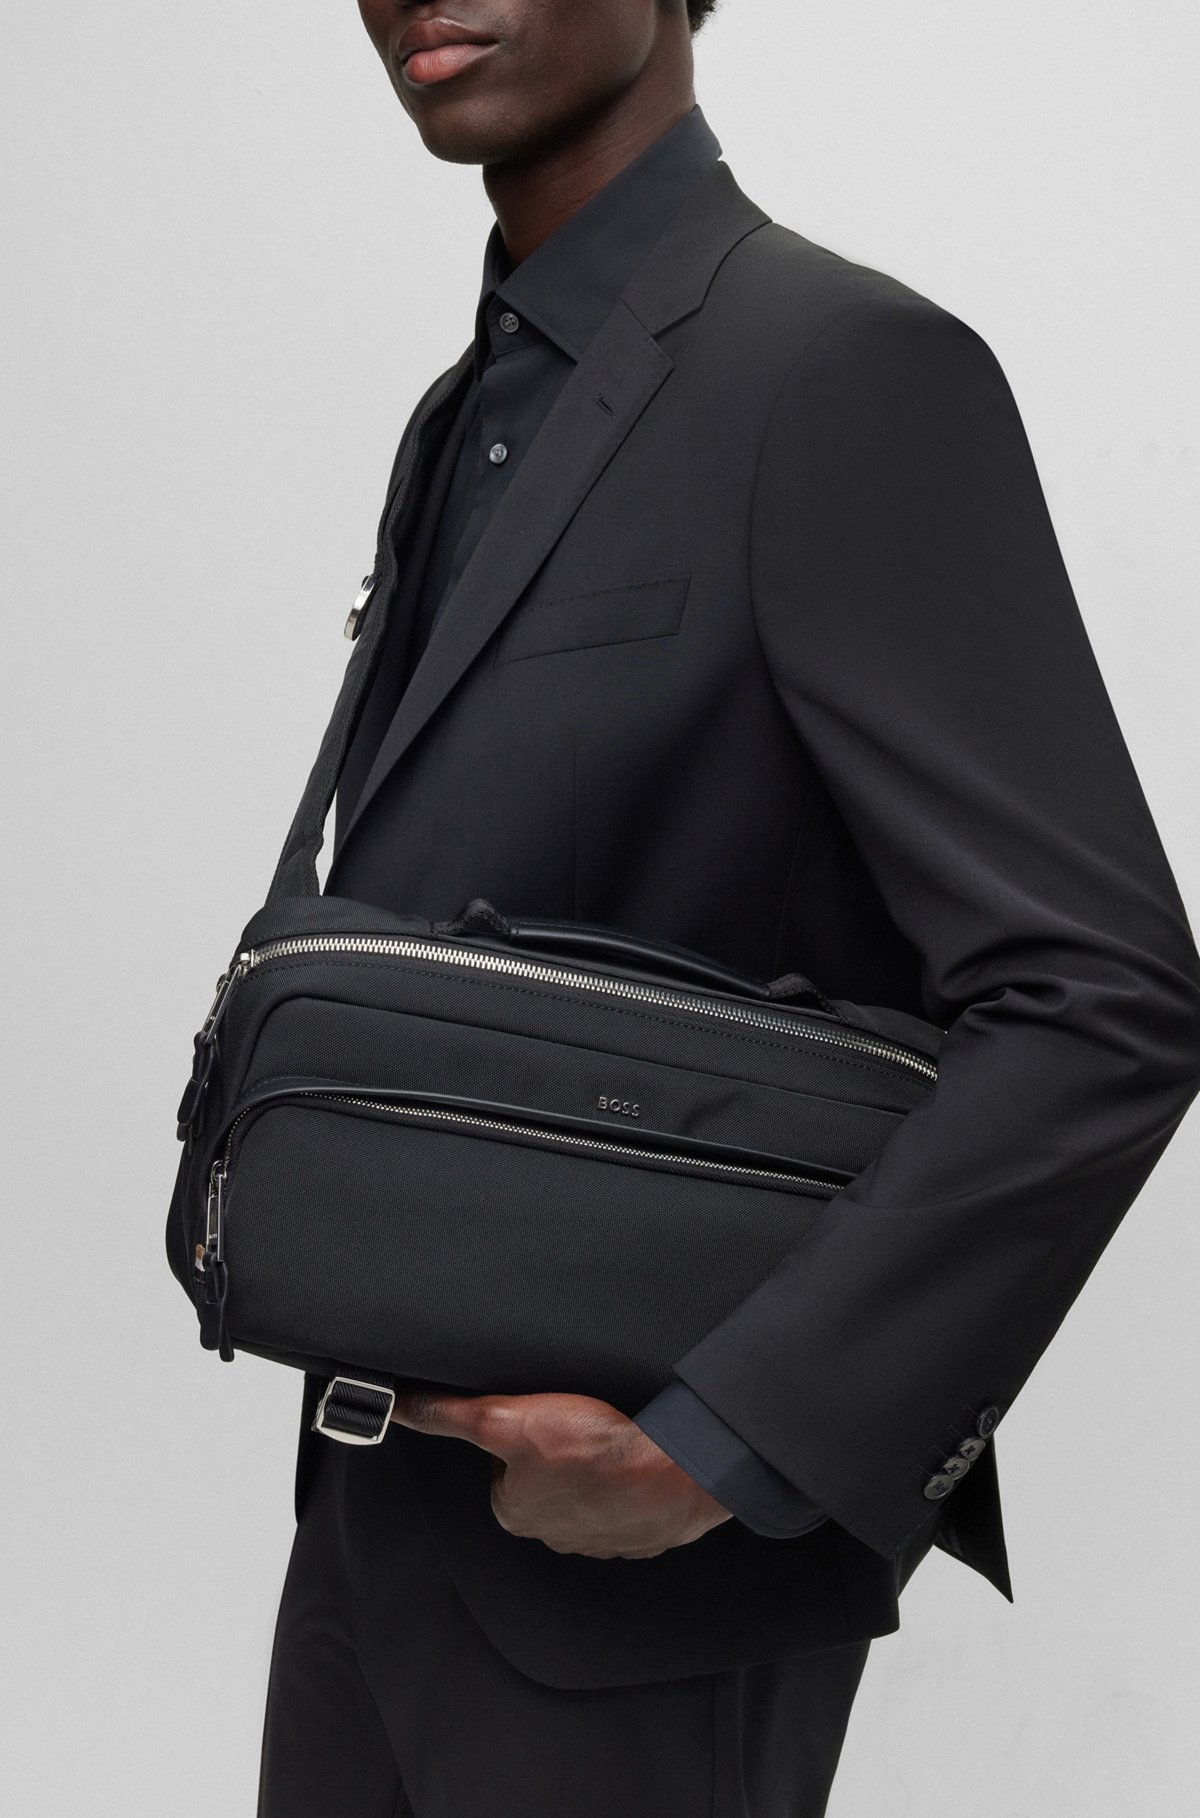 Hugo Boss Bag Man Sale Online | website.jkuat.ac.ke